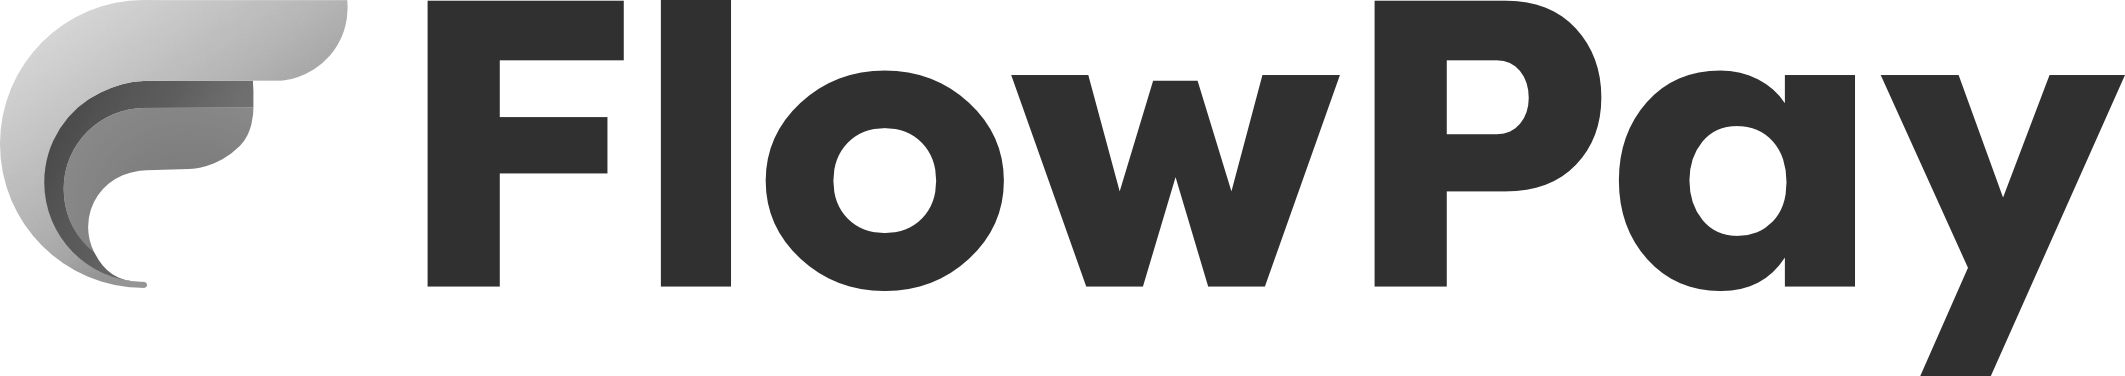 flowpay_logo